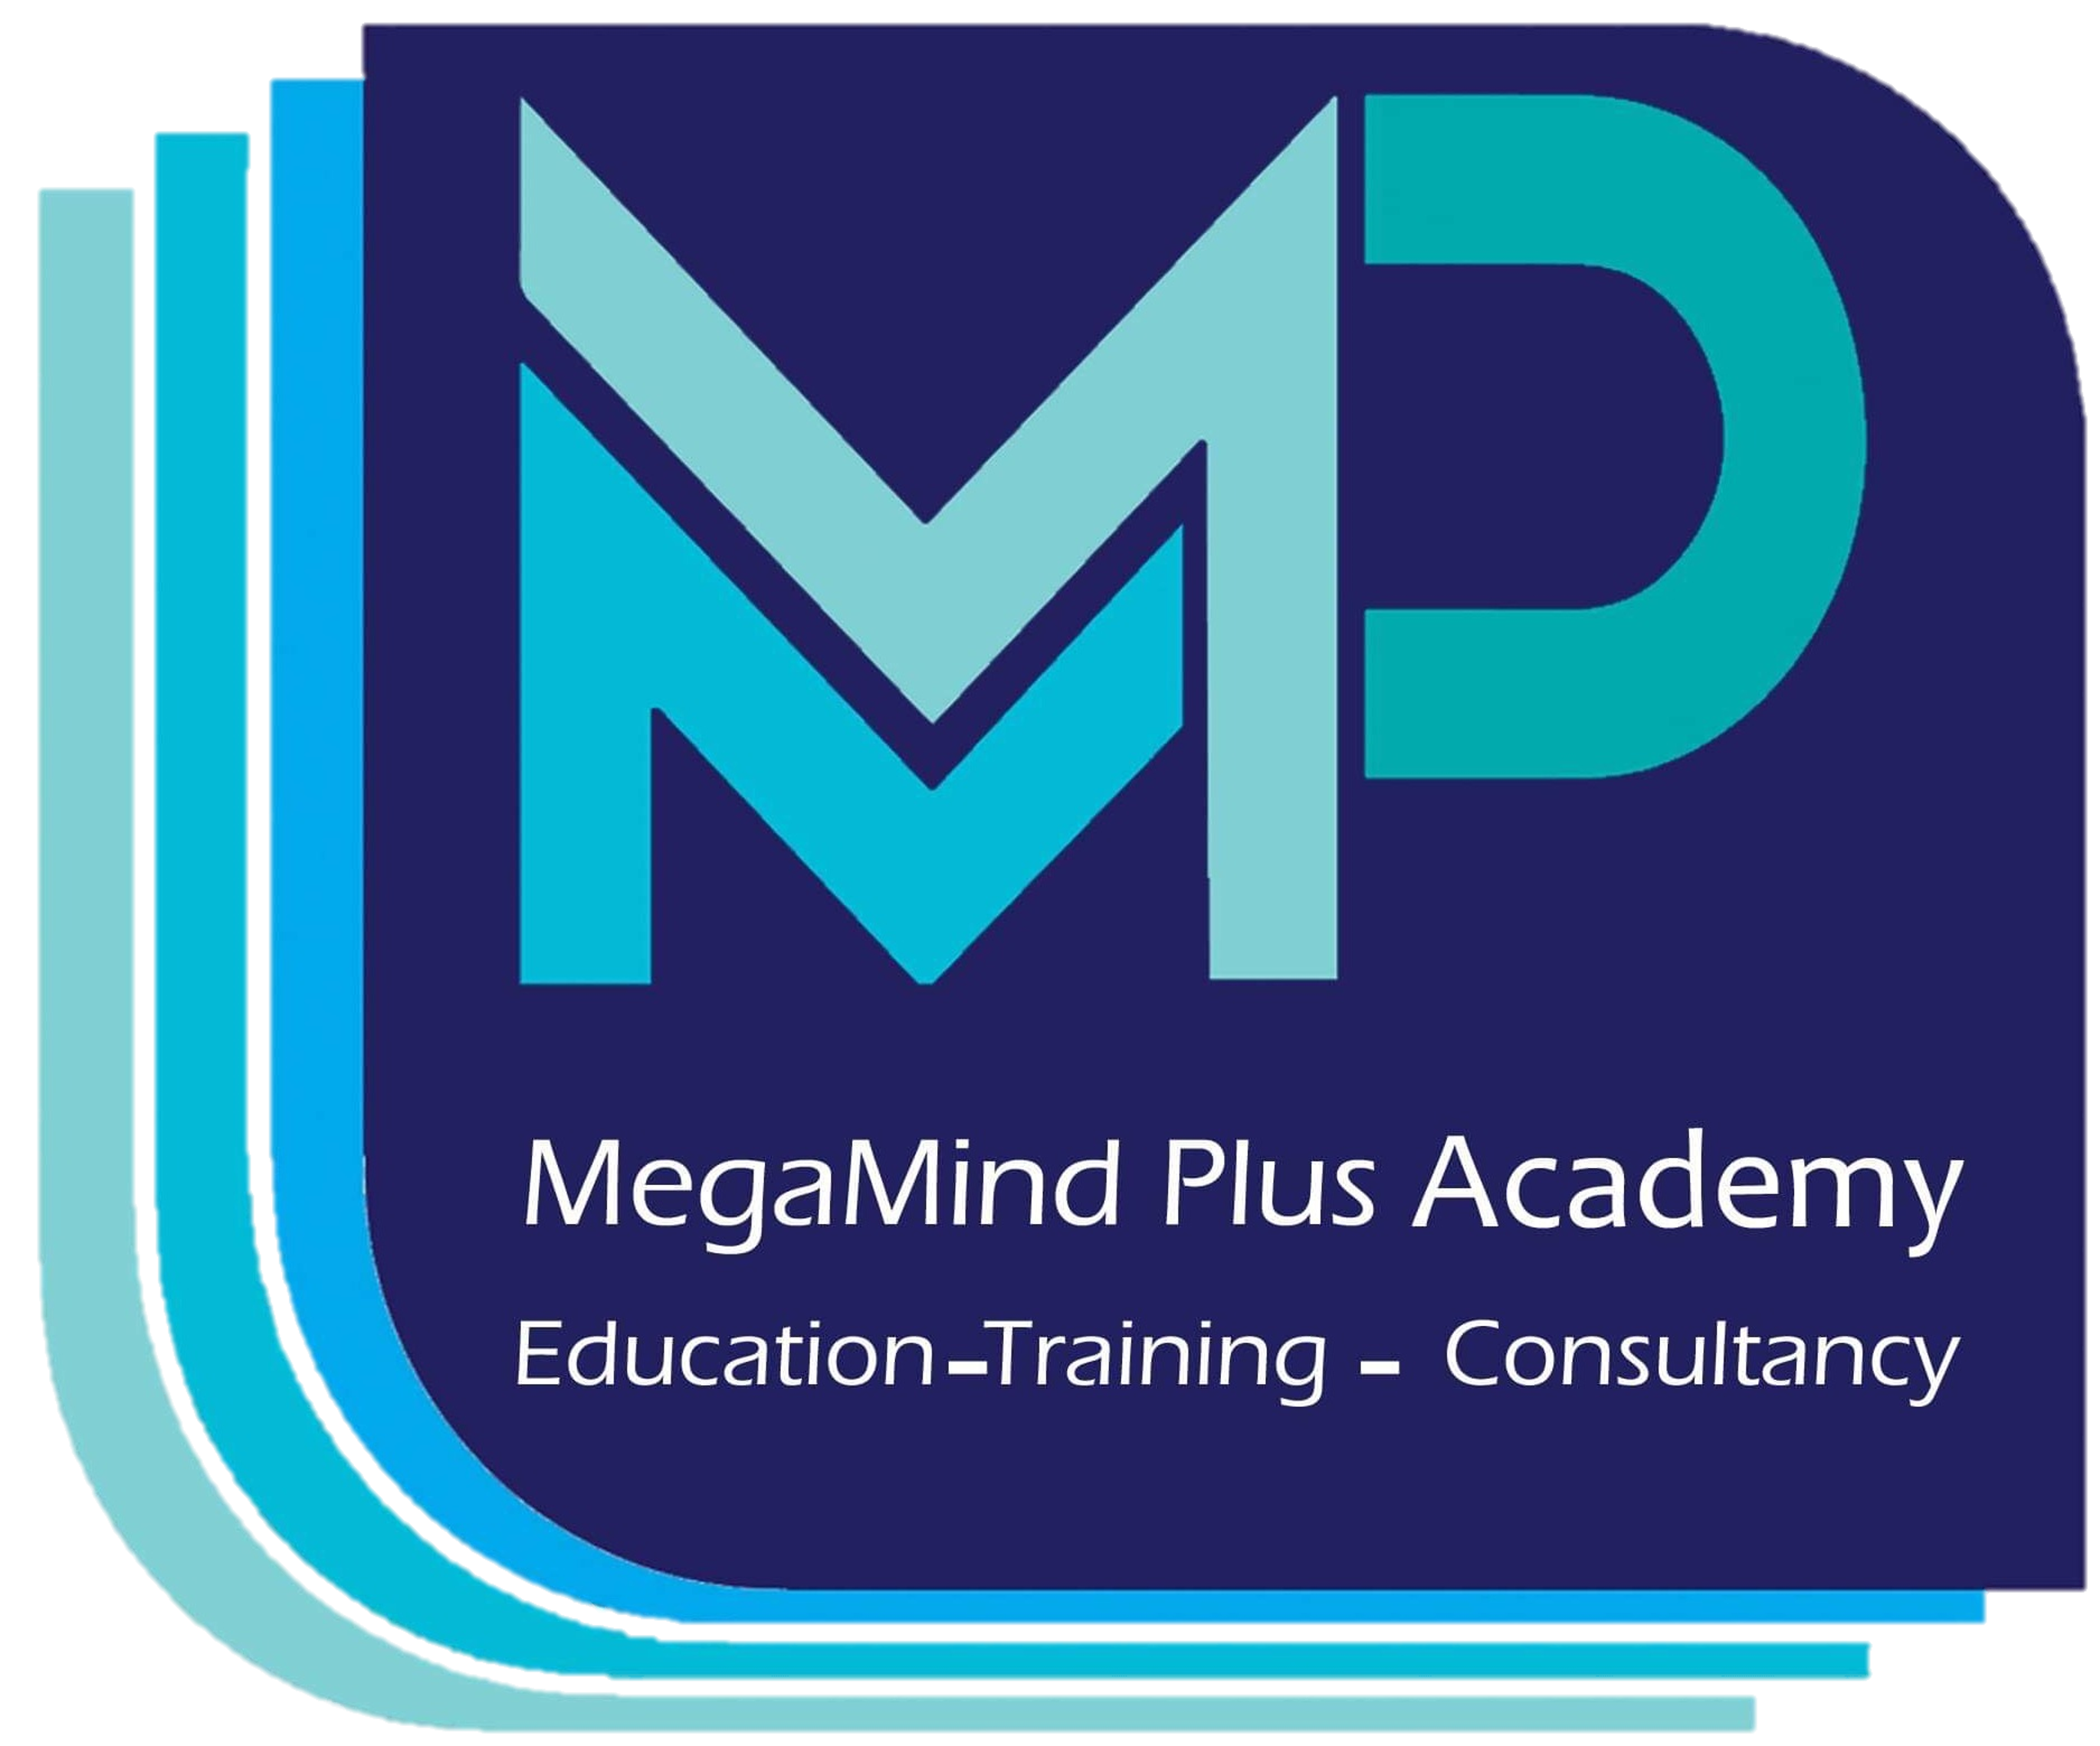 MegaMind Plus Academy